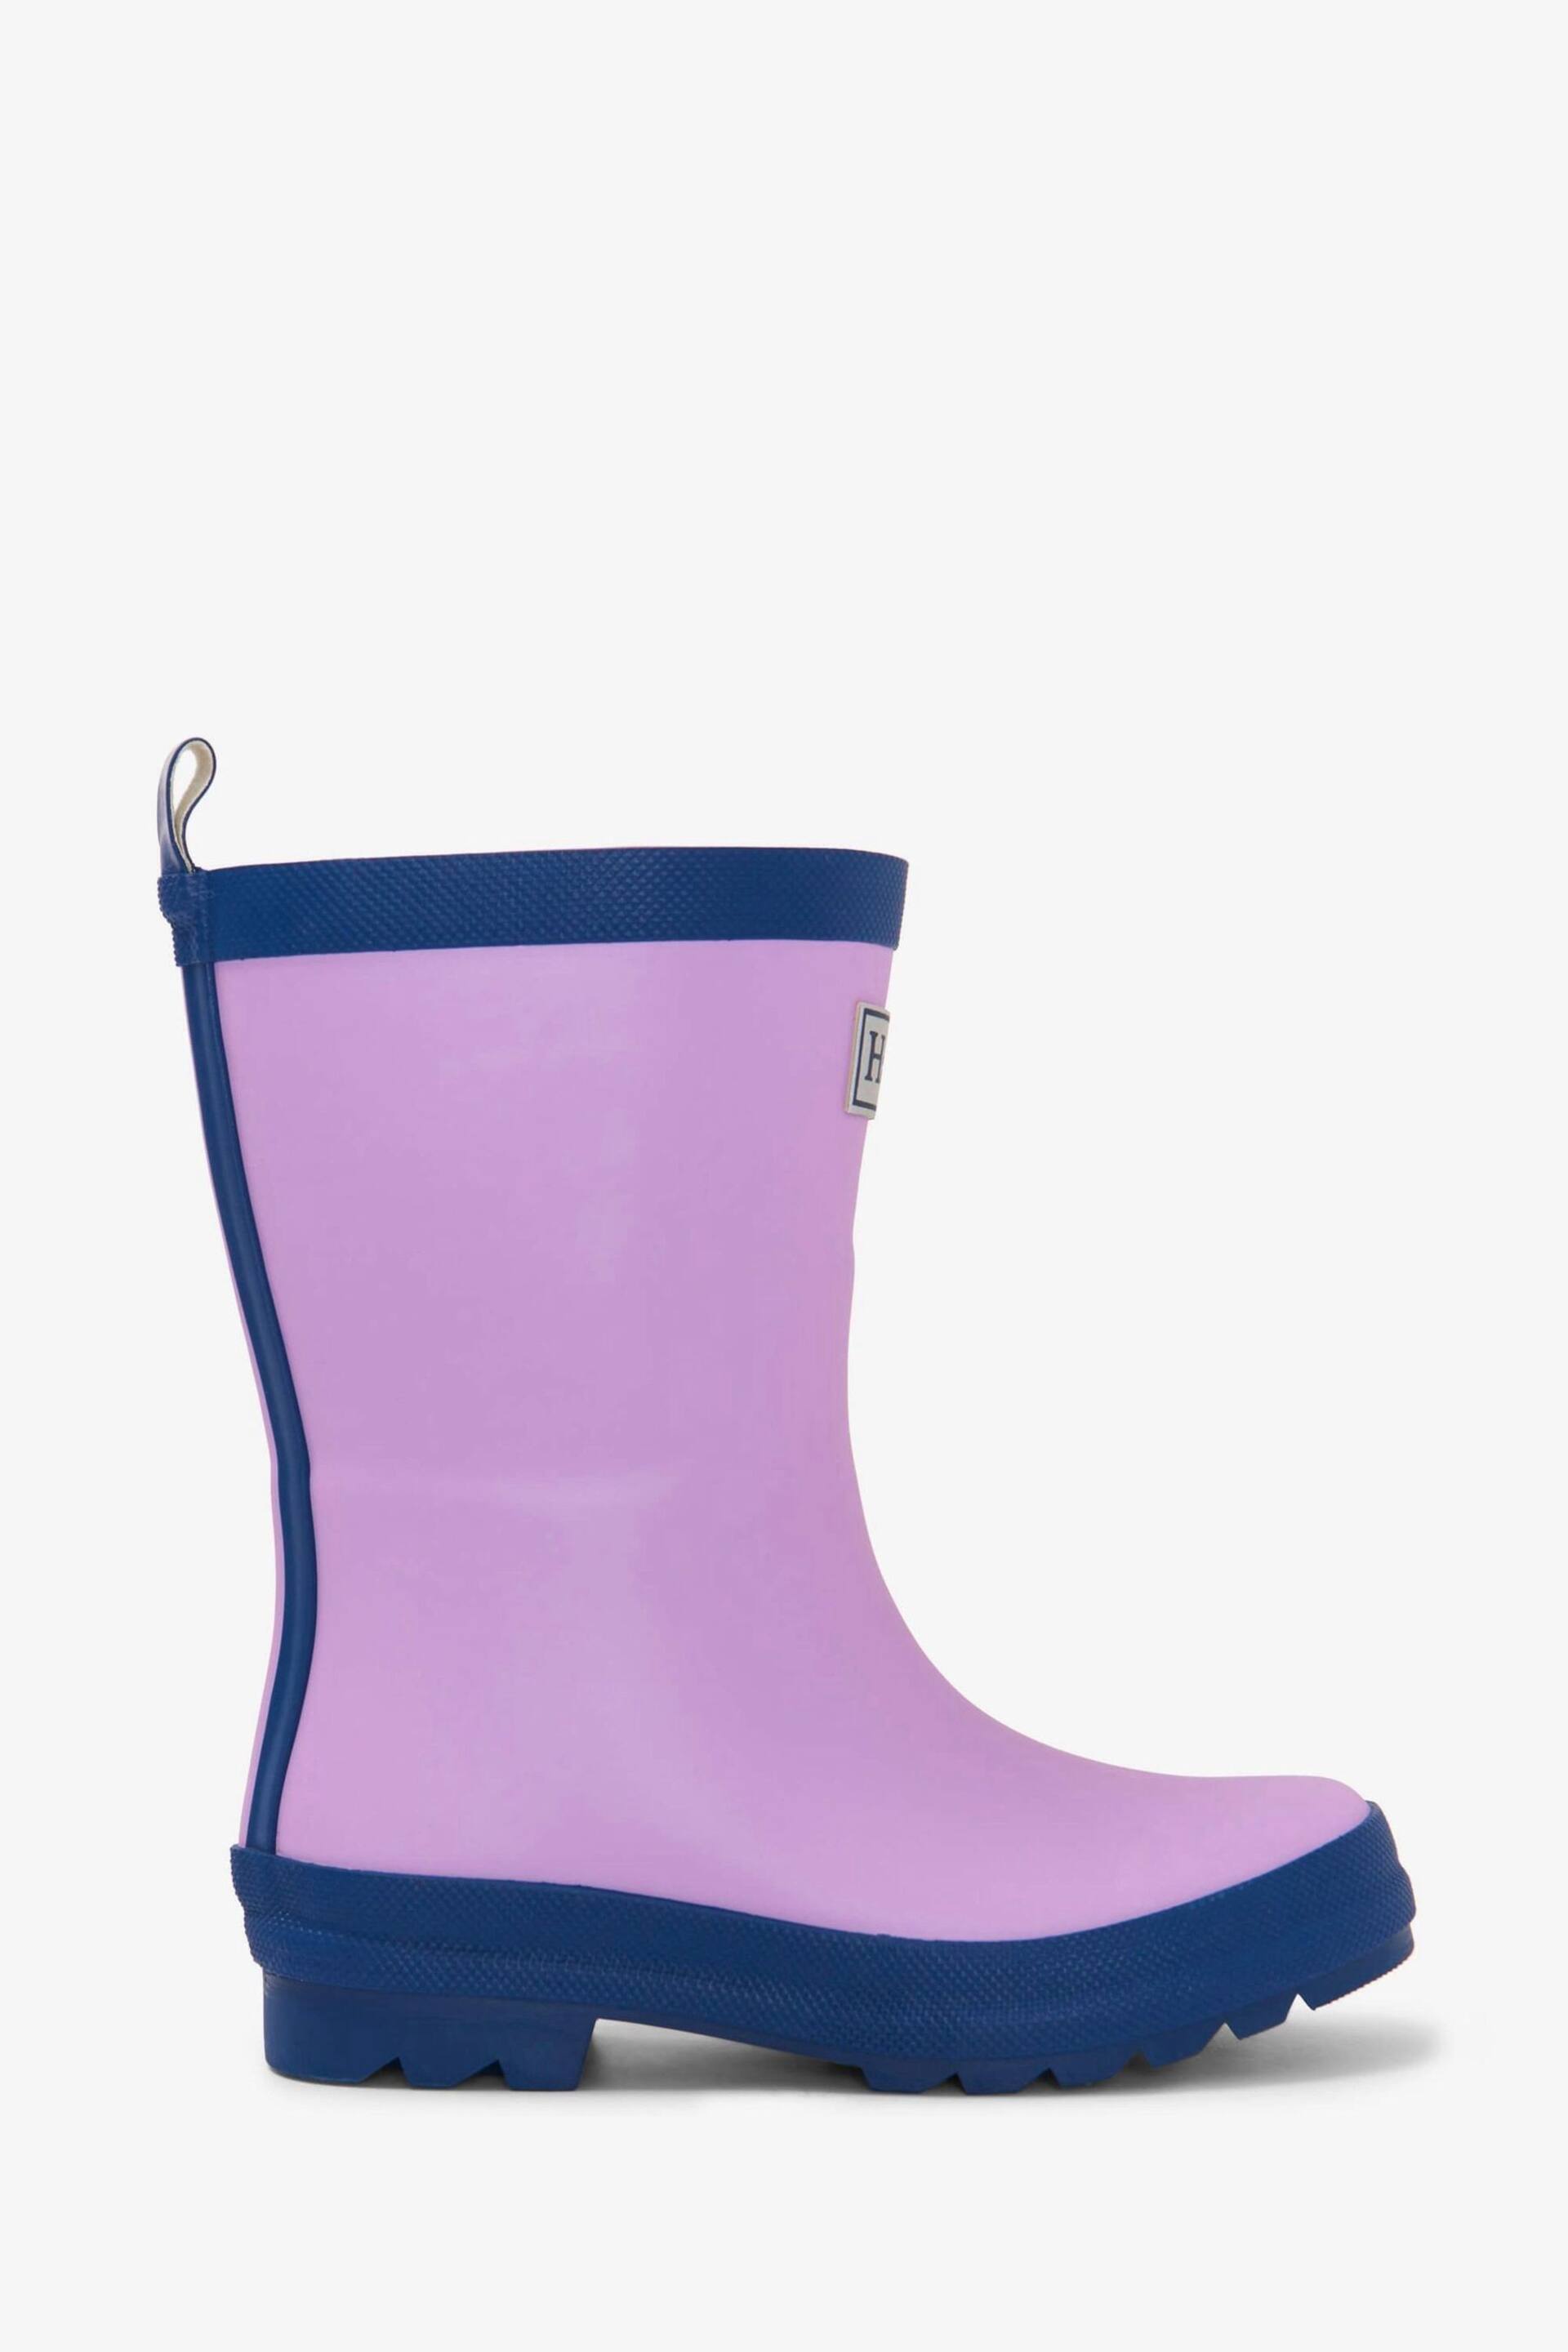 Hatley Purple Matte Rain Boots - Image 4 of 6